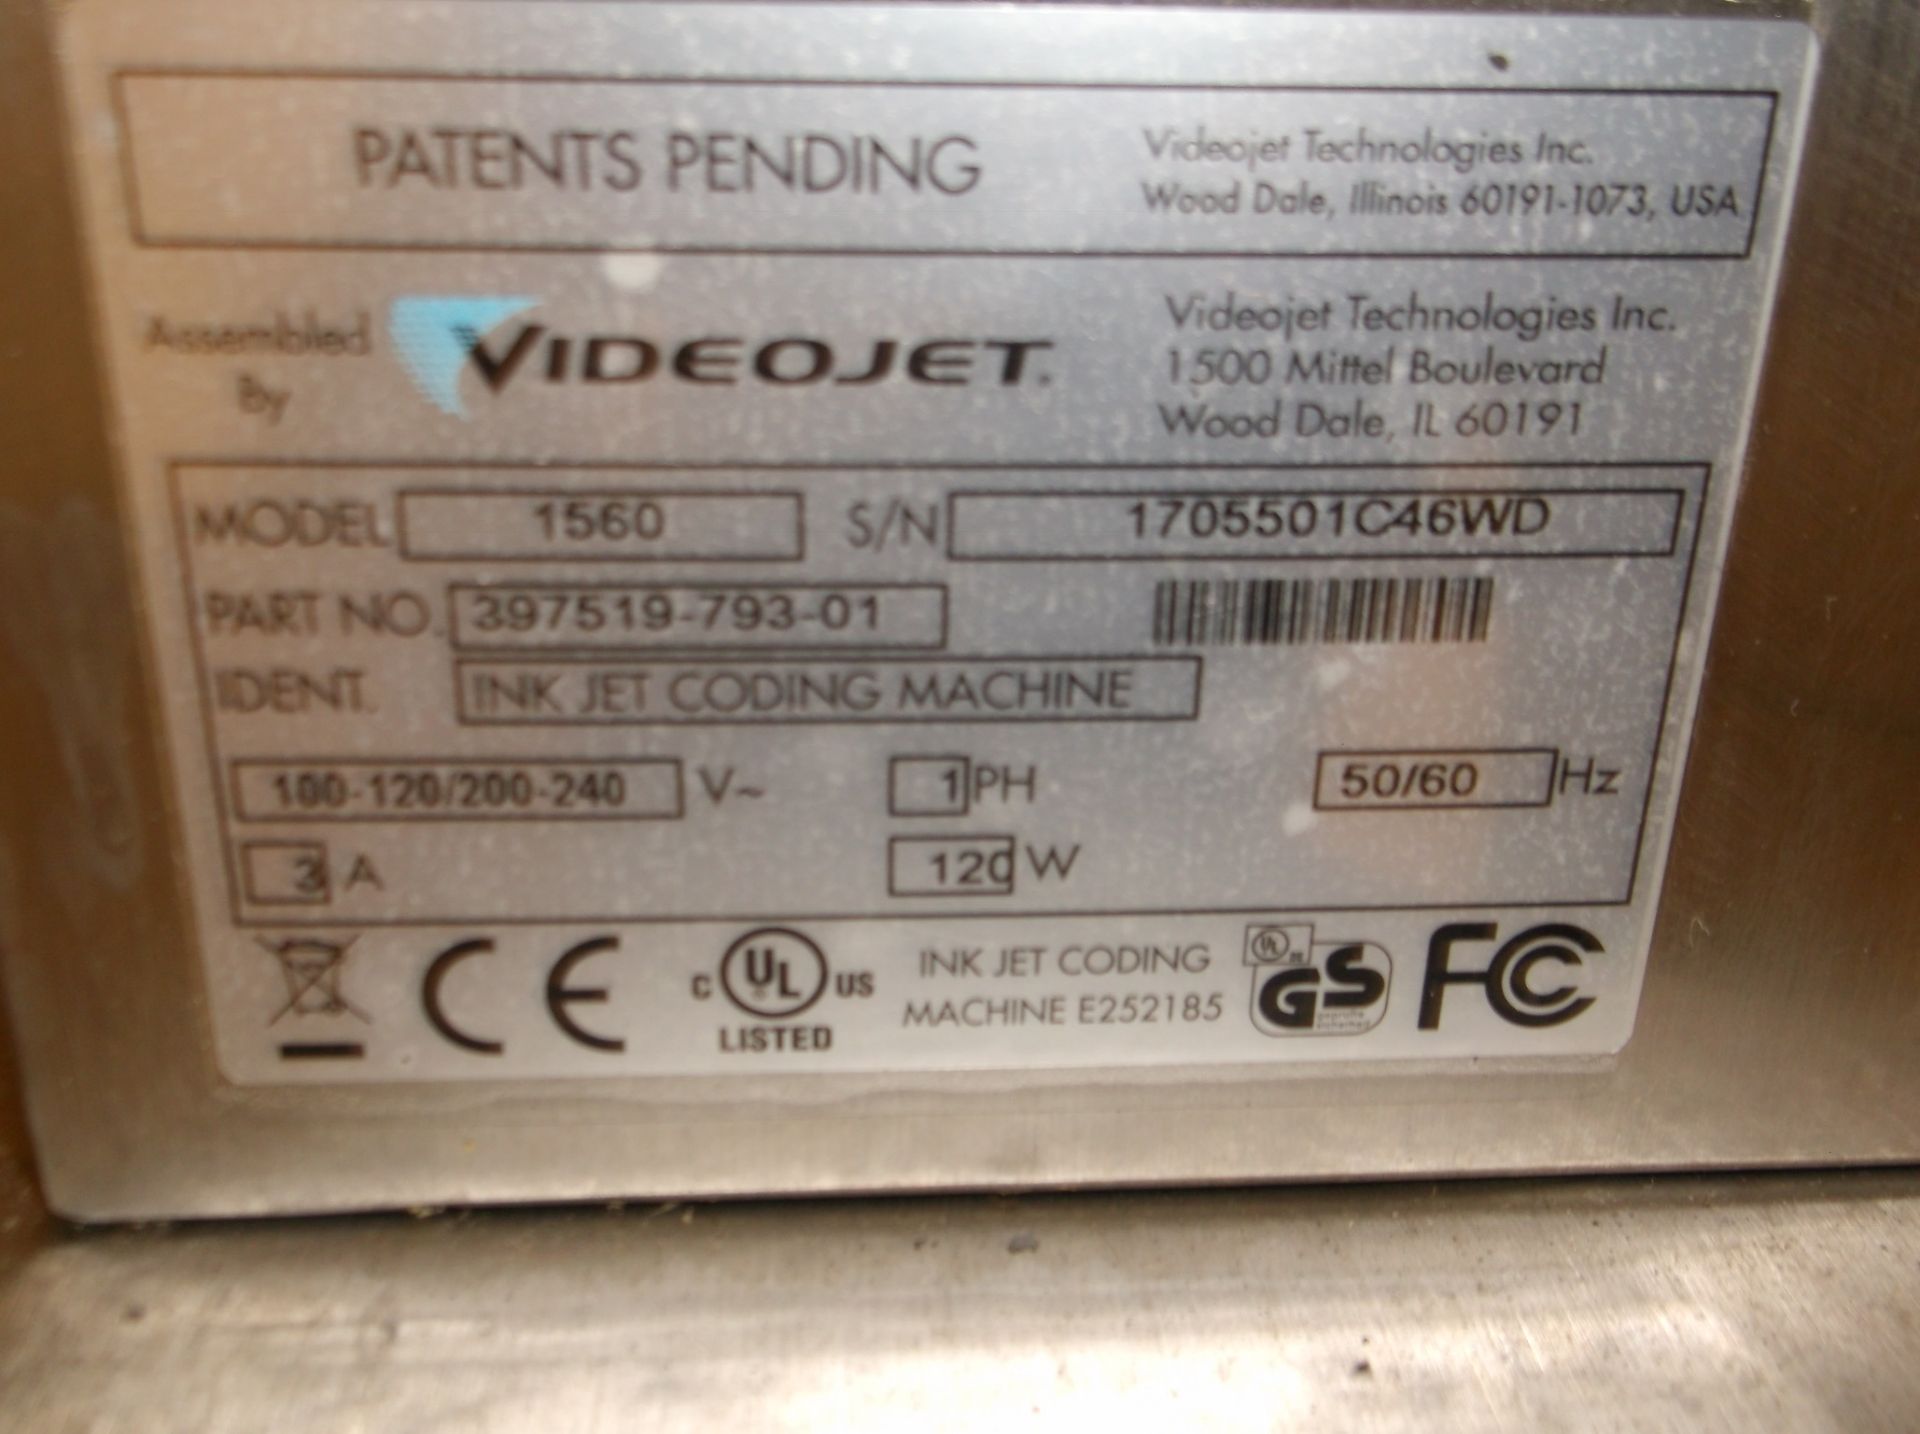 Videojet inkjet coder S/N 1705501C46WD M# 1560 | Rigging/Loading Fee: $200 - Image 3 of 4